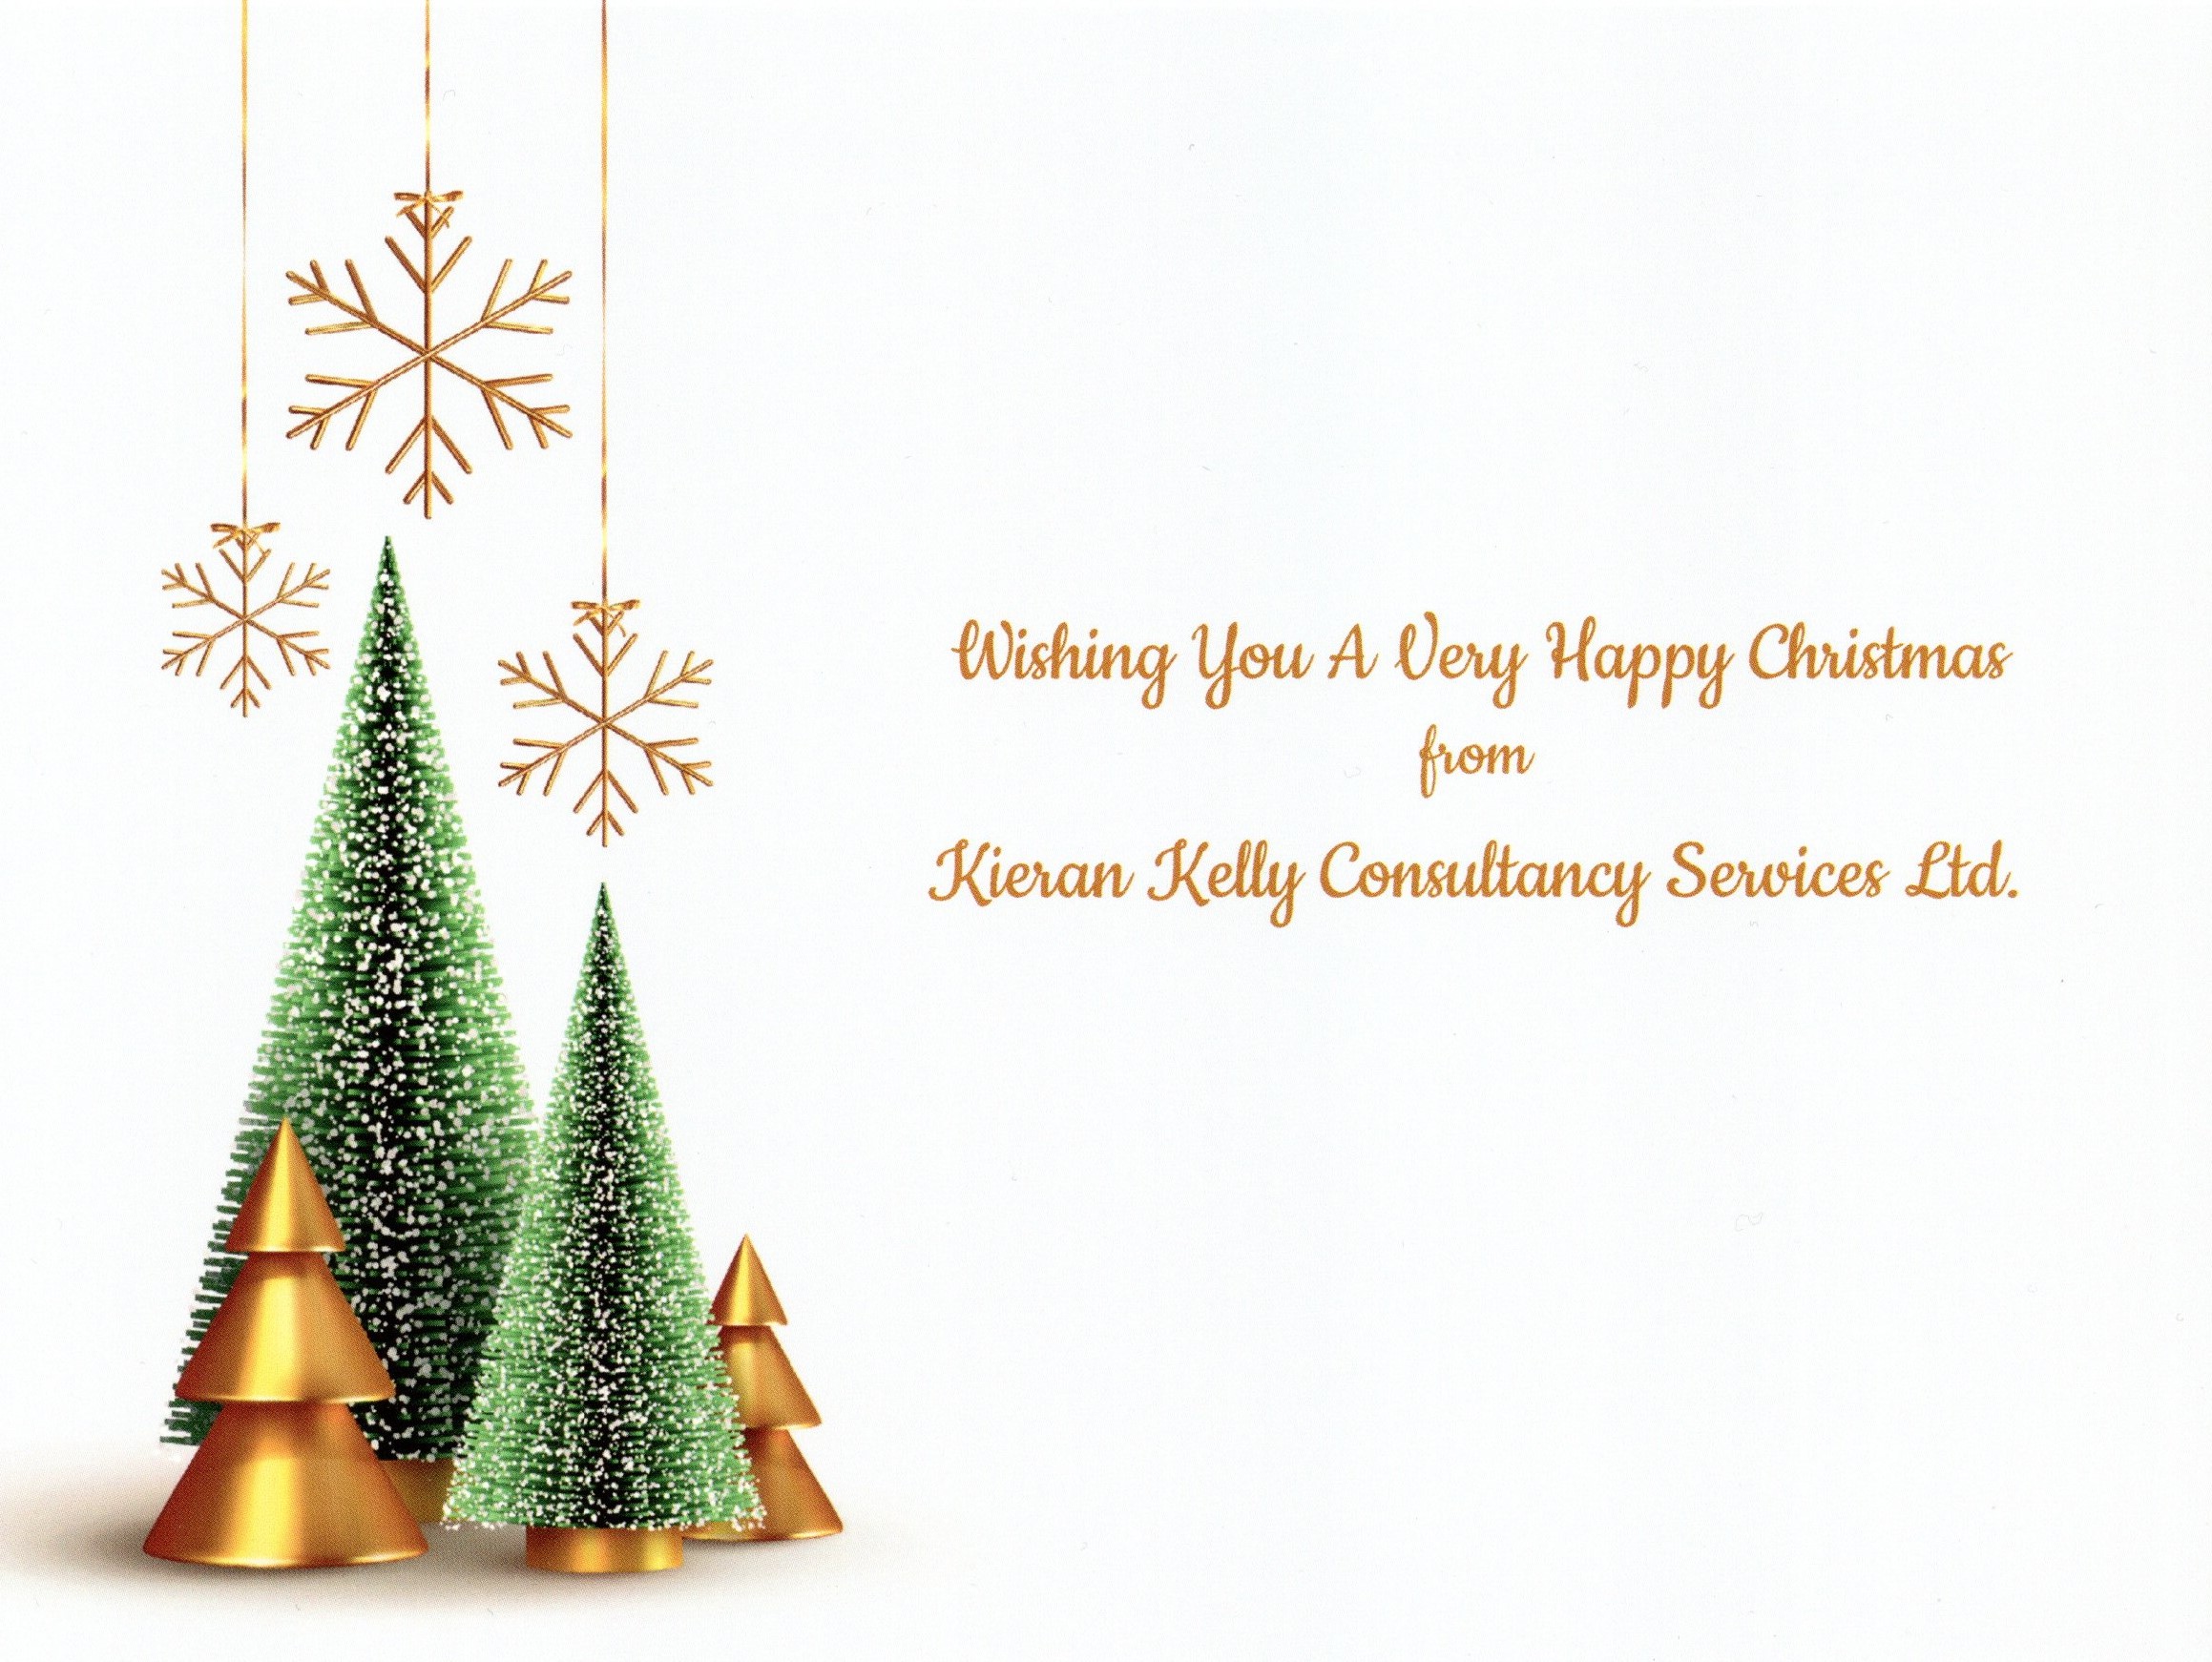 Wishing youa very happy Christmas from Kieran Kelly Consultancy Services Ltd.